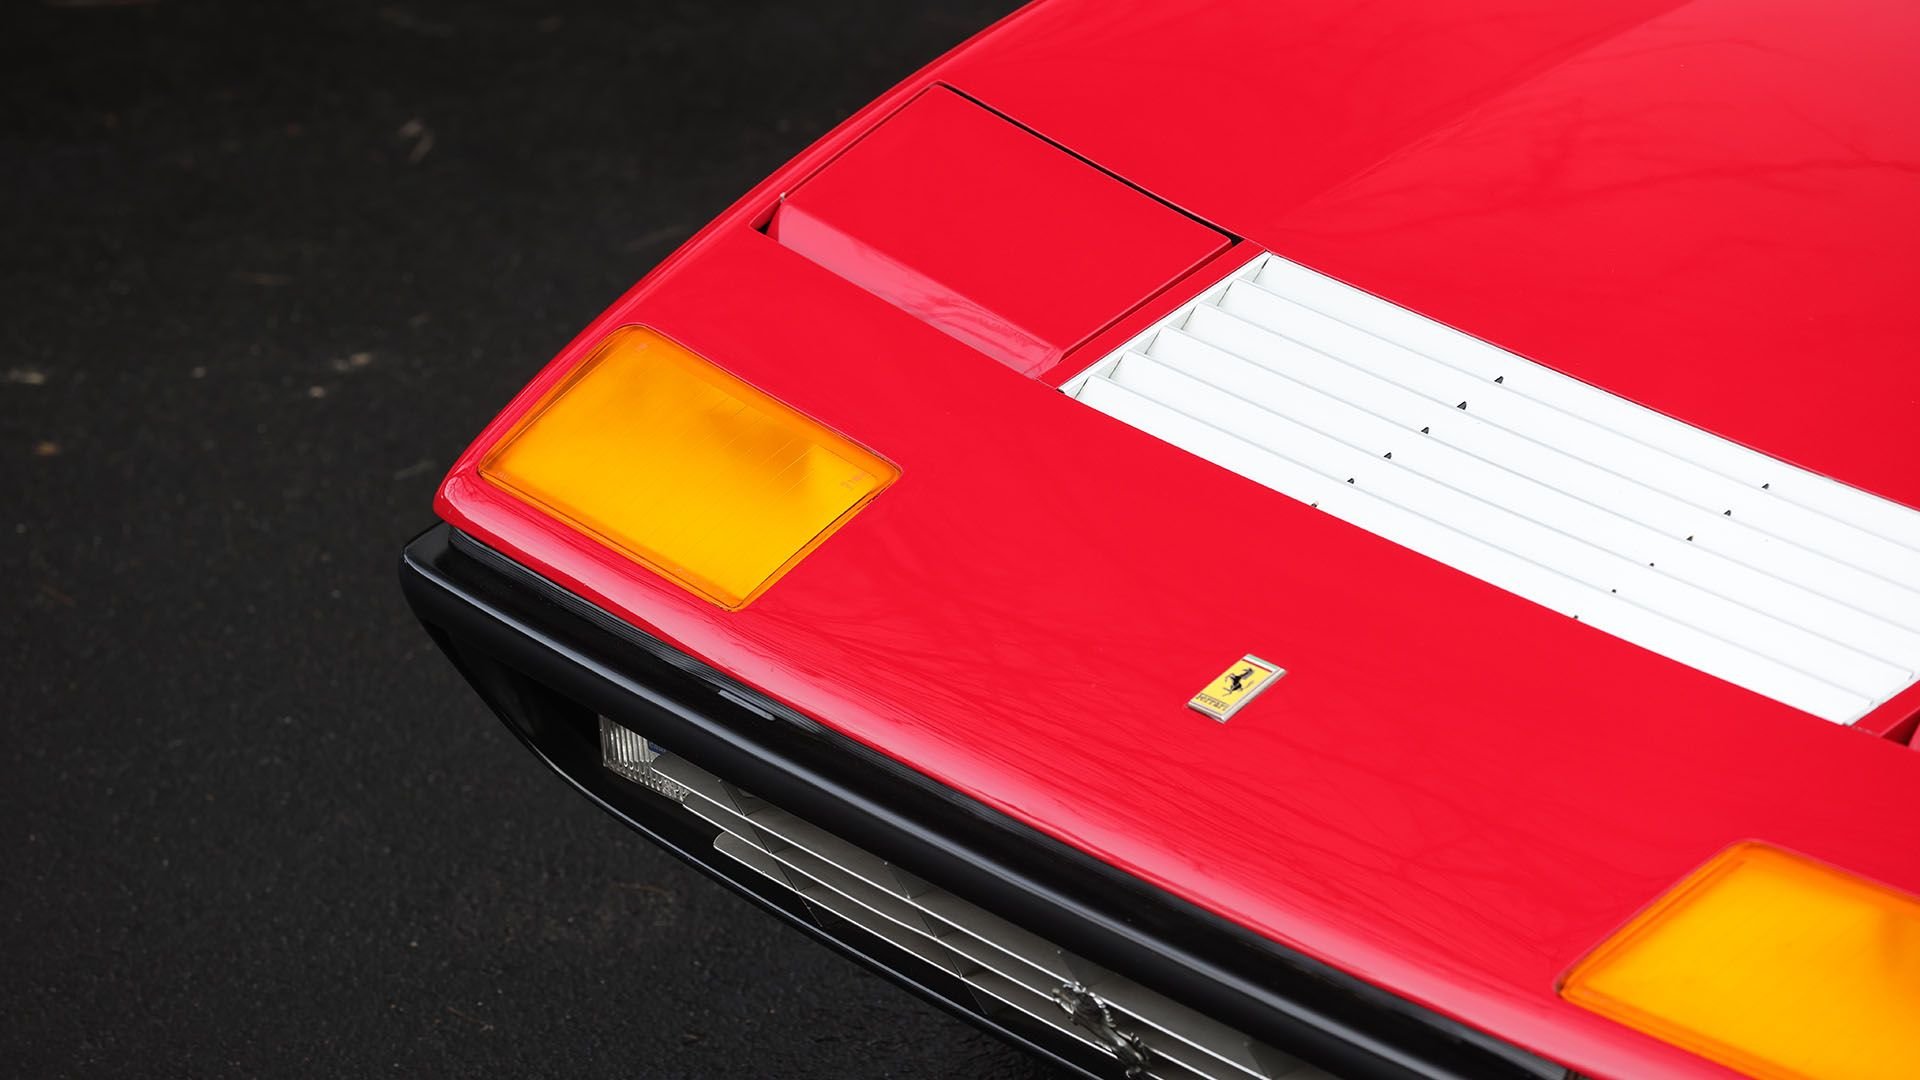 For Sale 1974 Ferrari 365 GT4 Berlinetta Boxer